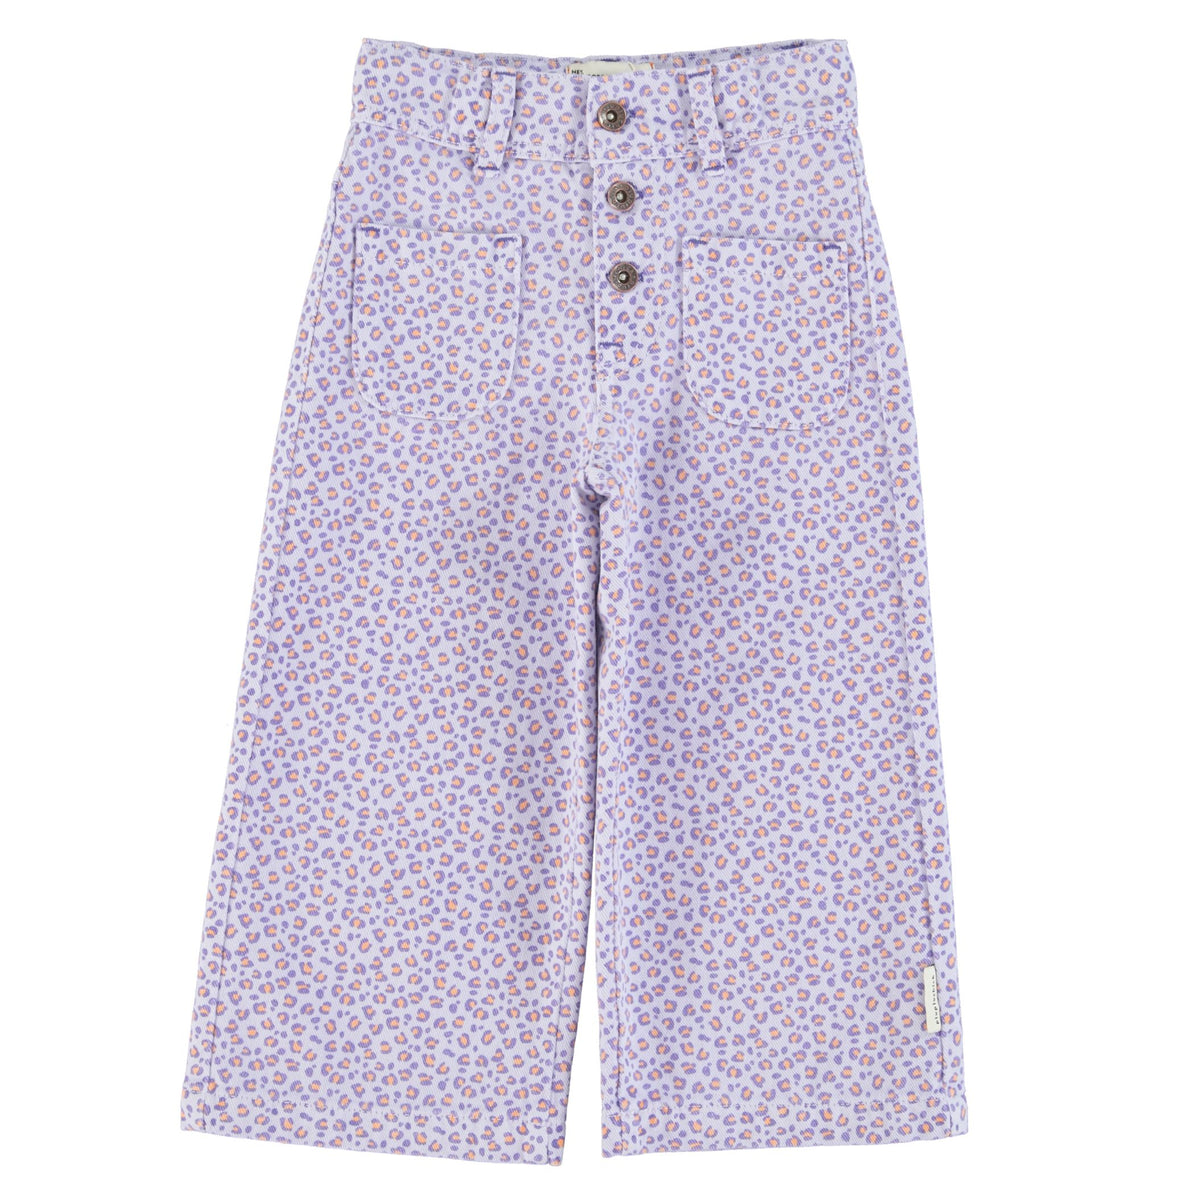 piupiuchick flare trousers - lavender animal print